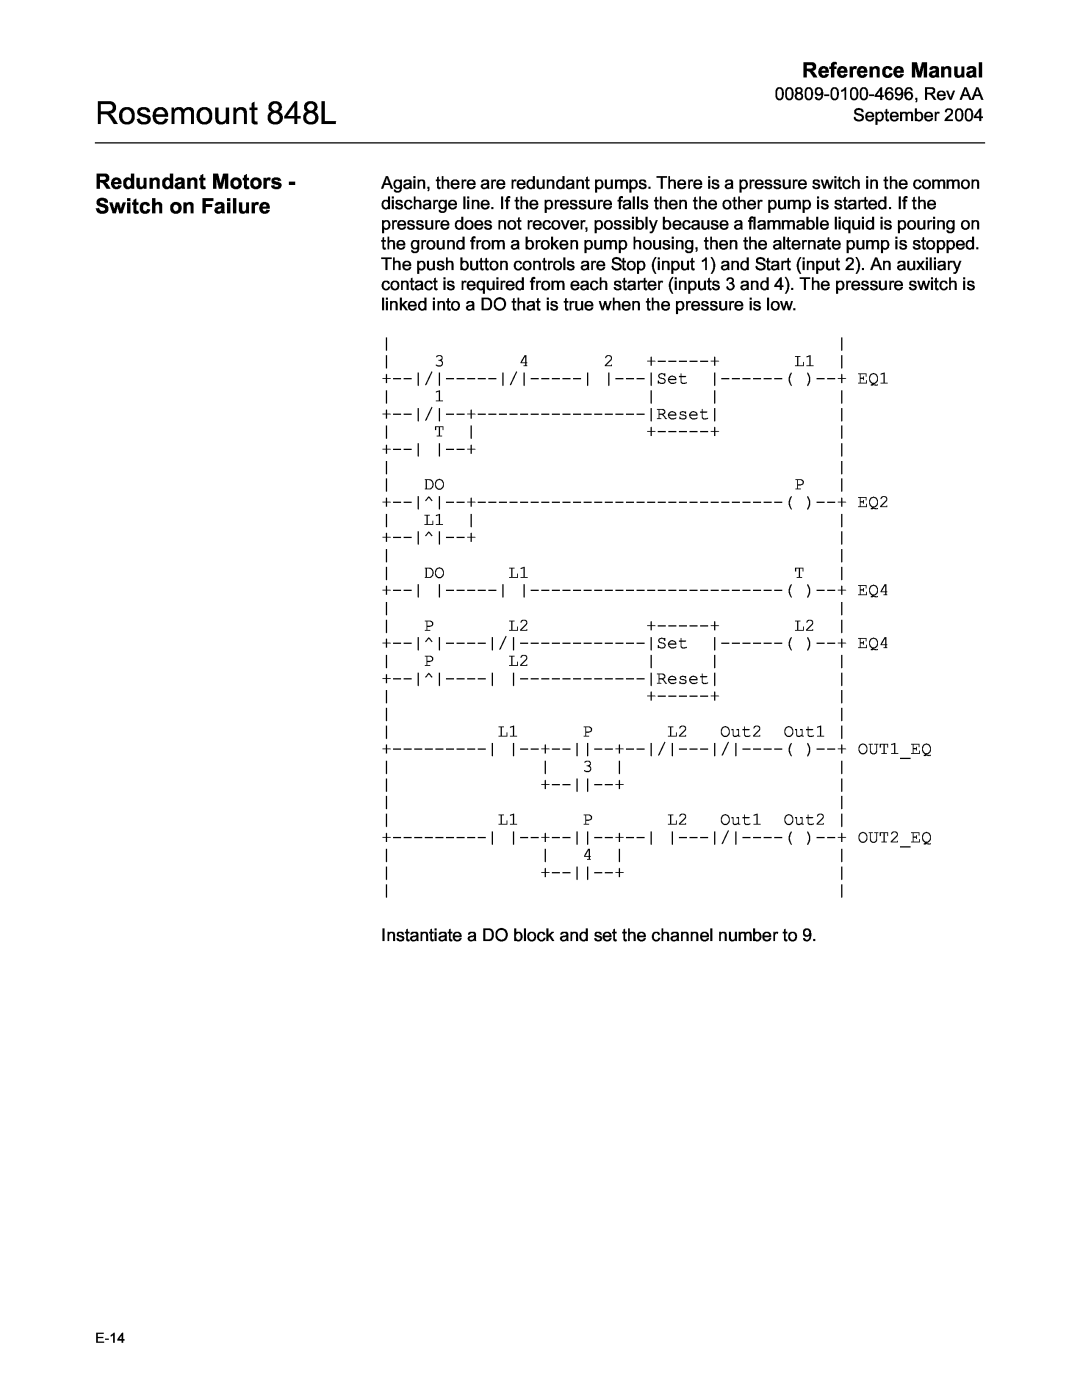 Emerson manual Redundant Motors - Switch on Failure, Rosemount 848L, Reference Manual 